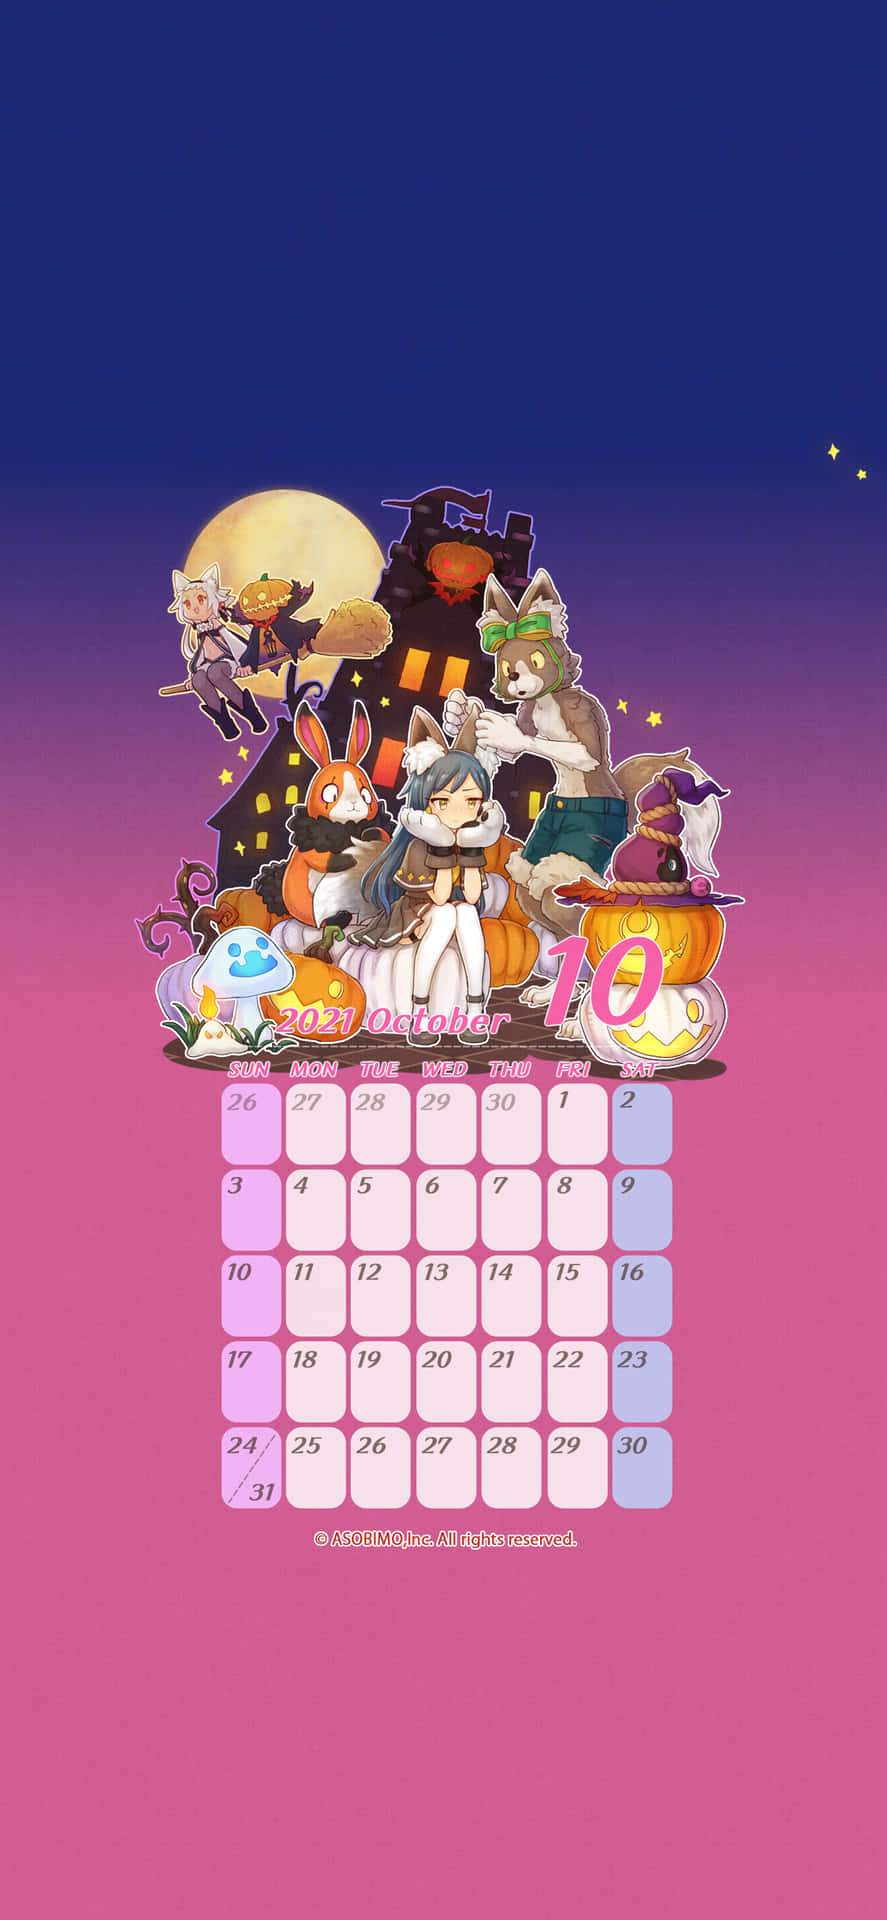 A Calendar With A Cartoon Character On It Wallpaper